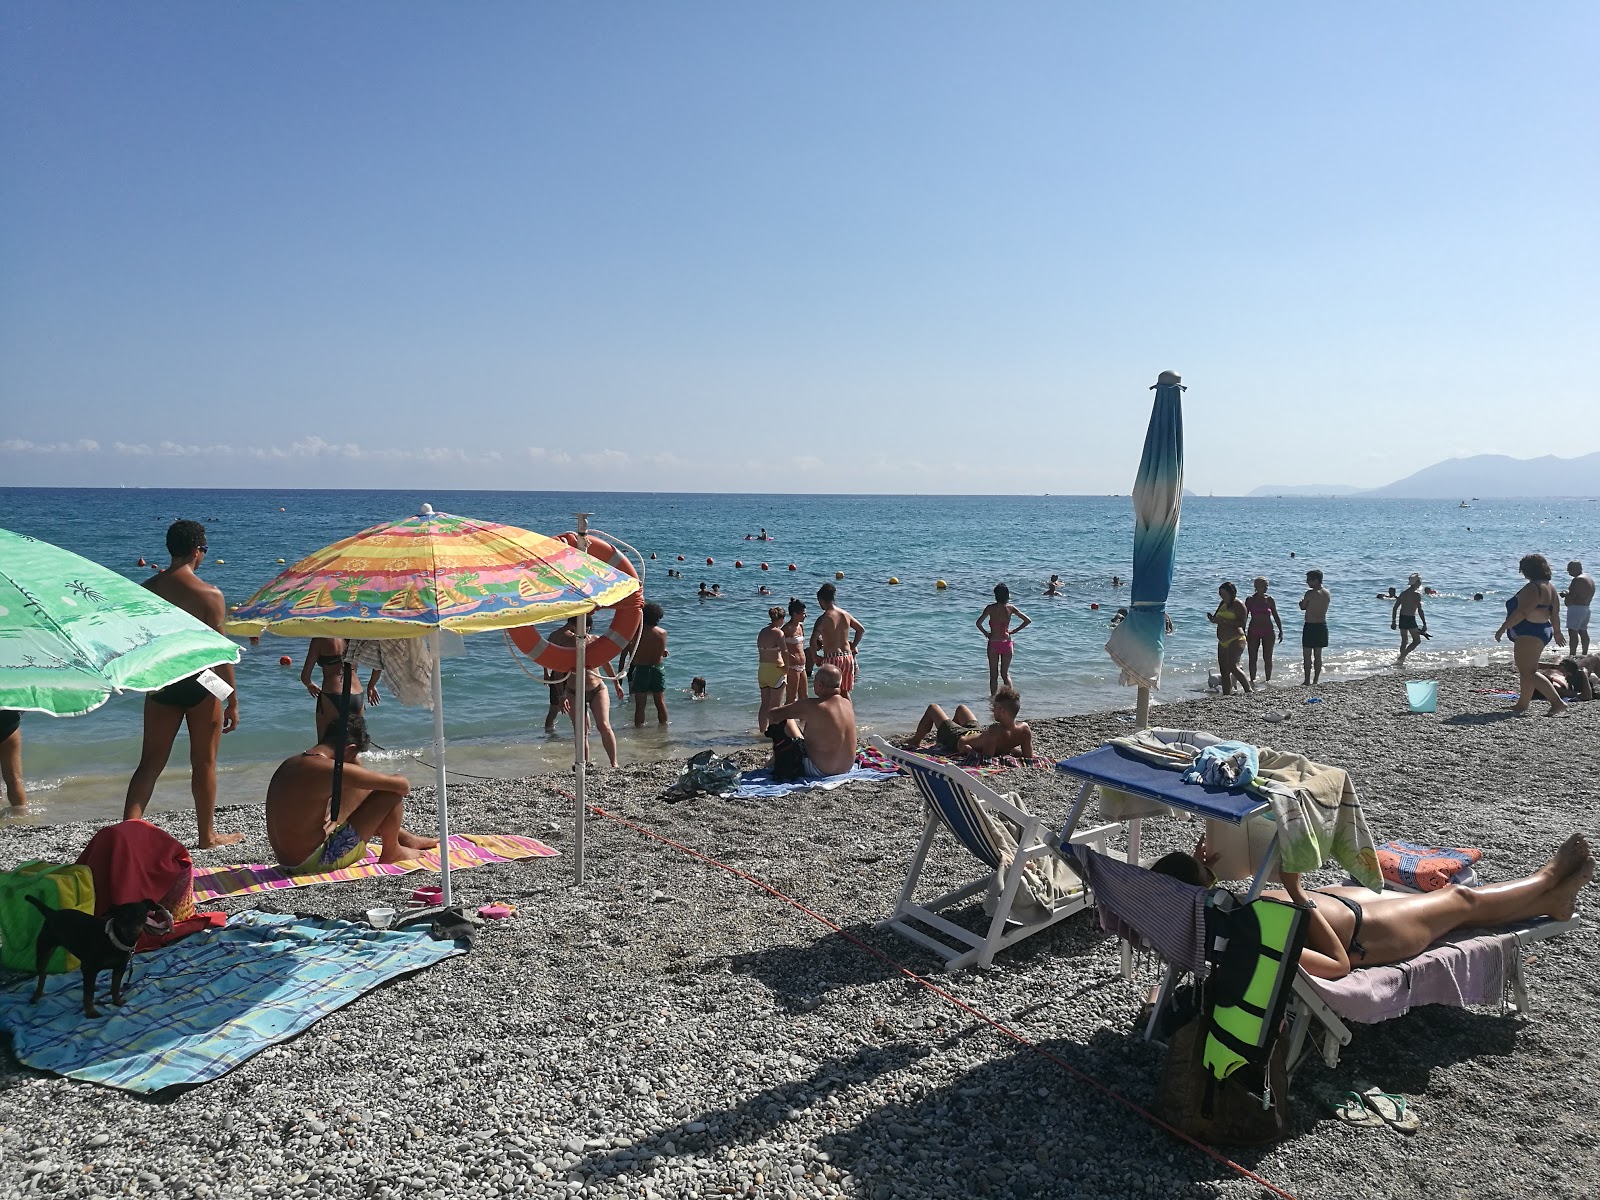 Foto de Spiaggia di Borgio - lugar popular entre os apreciadores de relaxamento